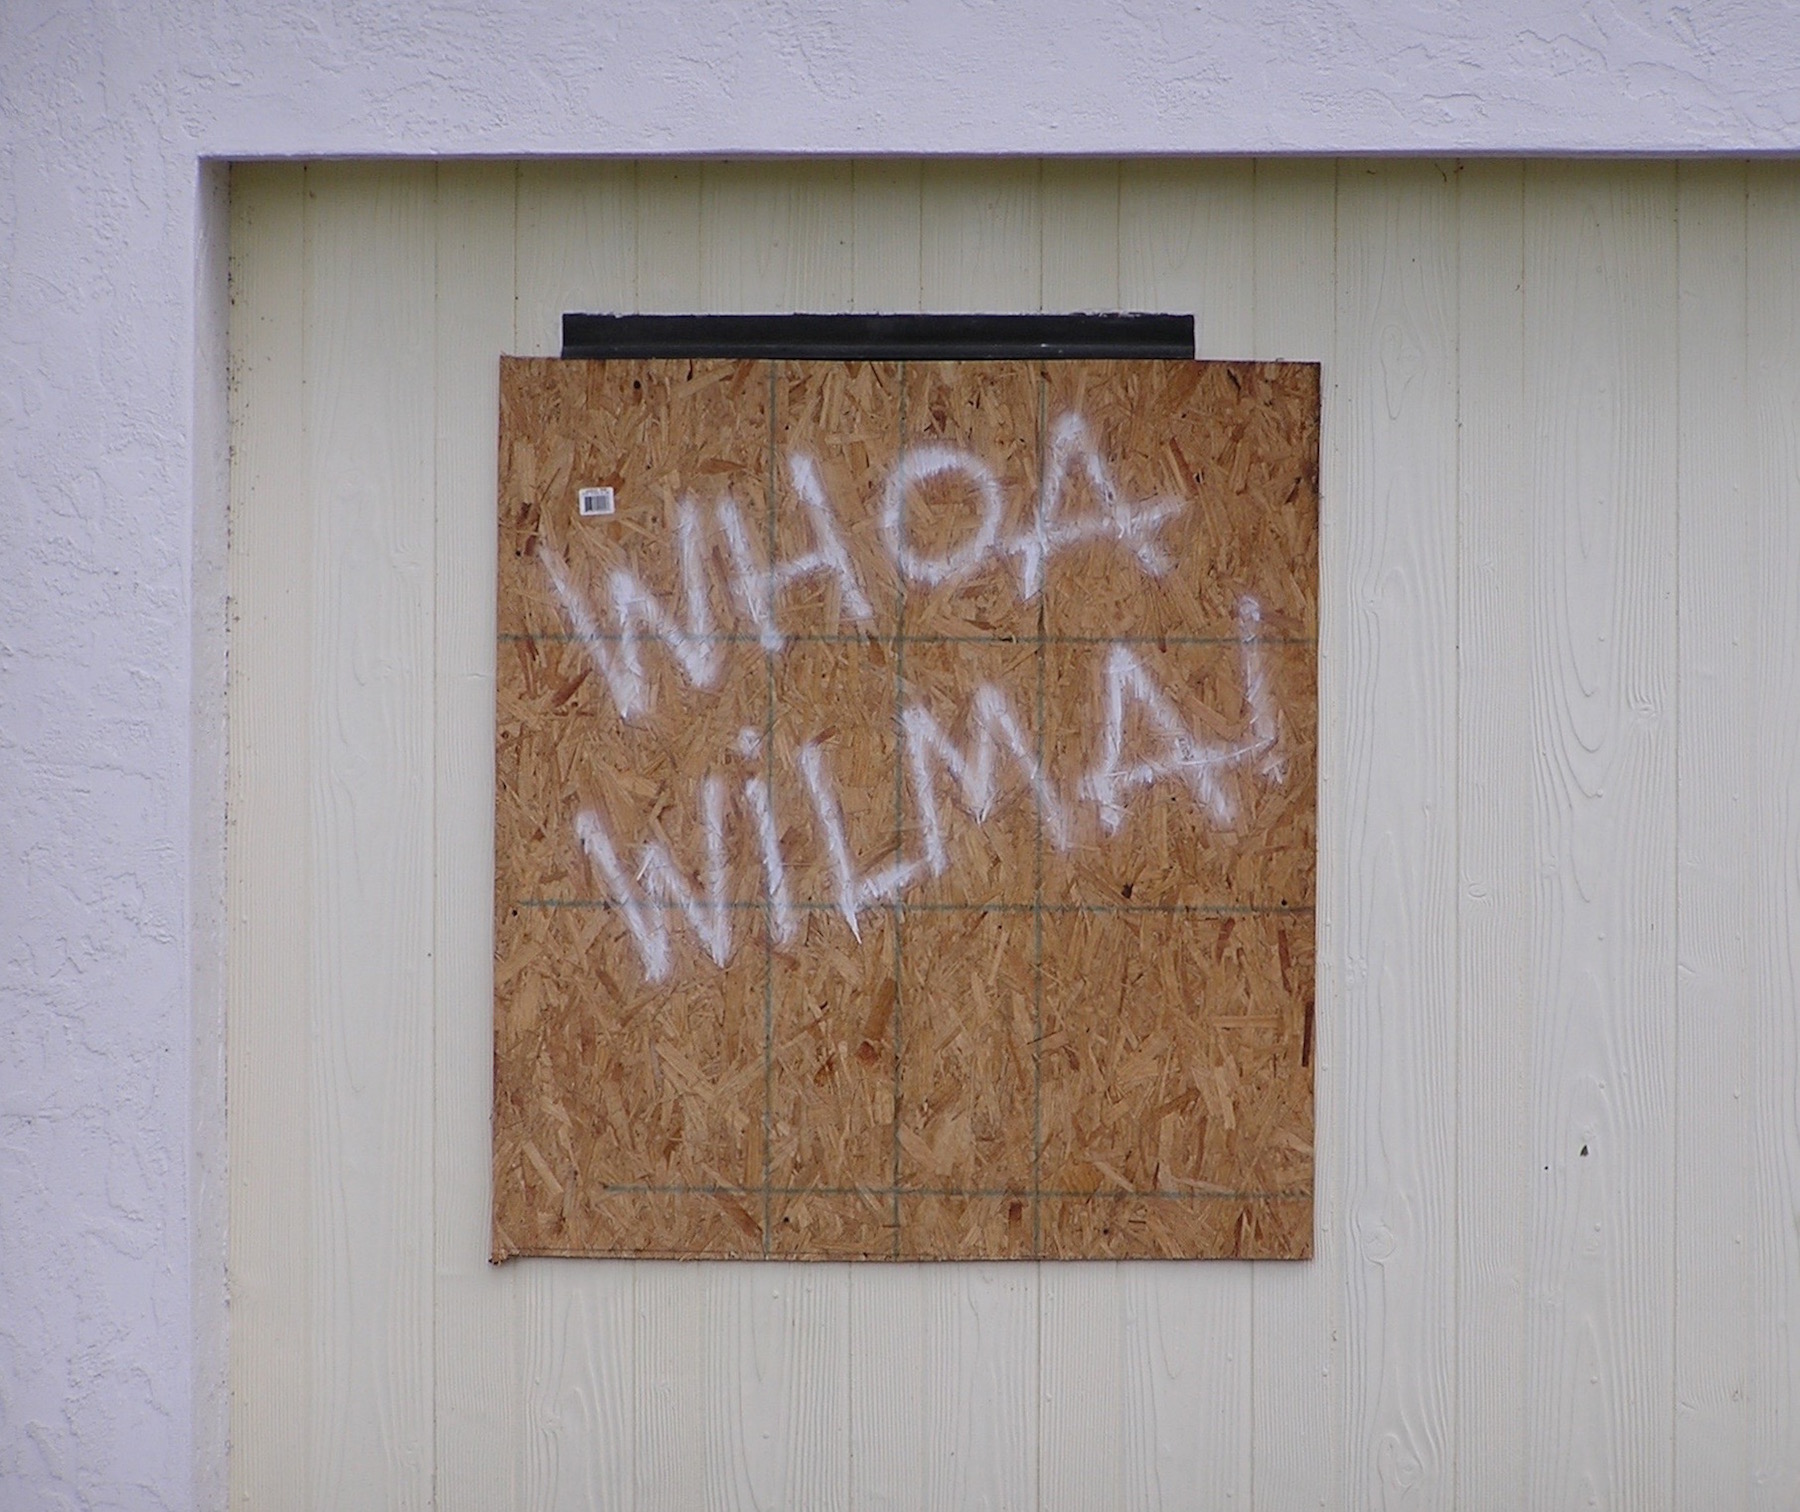 Whoa Wilma